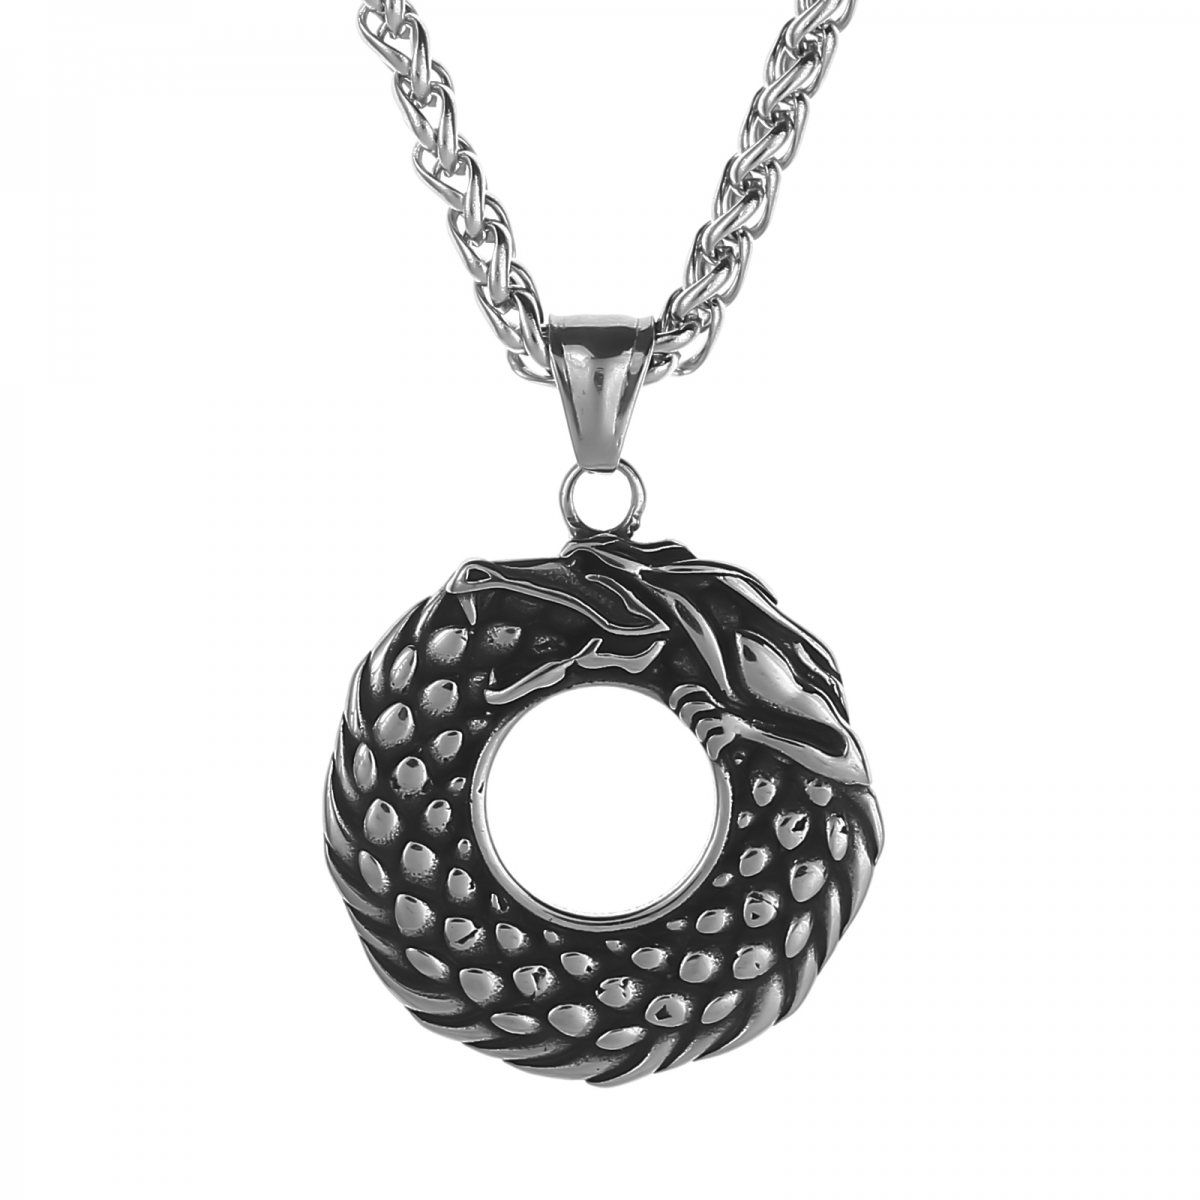 World Serpent Jormungandr Snake Necklace US$2.9/PC-NORSECOLLECTION- Viking Jewelry,Viking Necklace,Viking Bracelet,Viking Rings,Viking Mugs,Viking Accessories,Viking Crafts